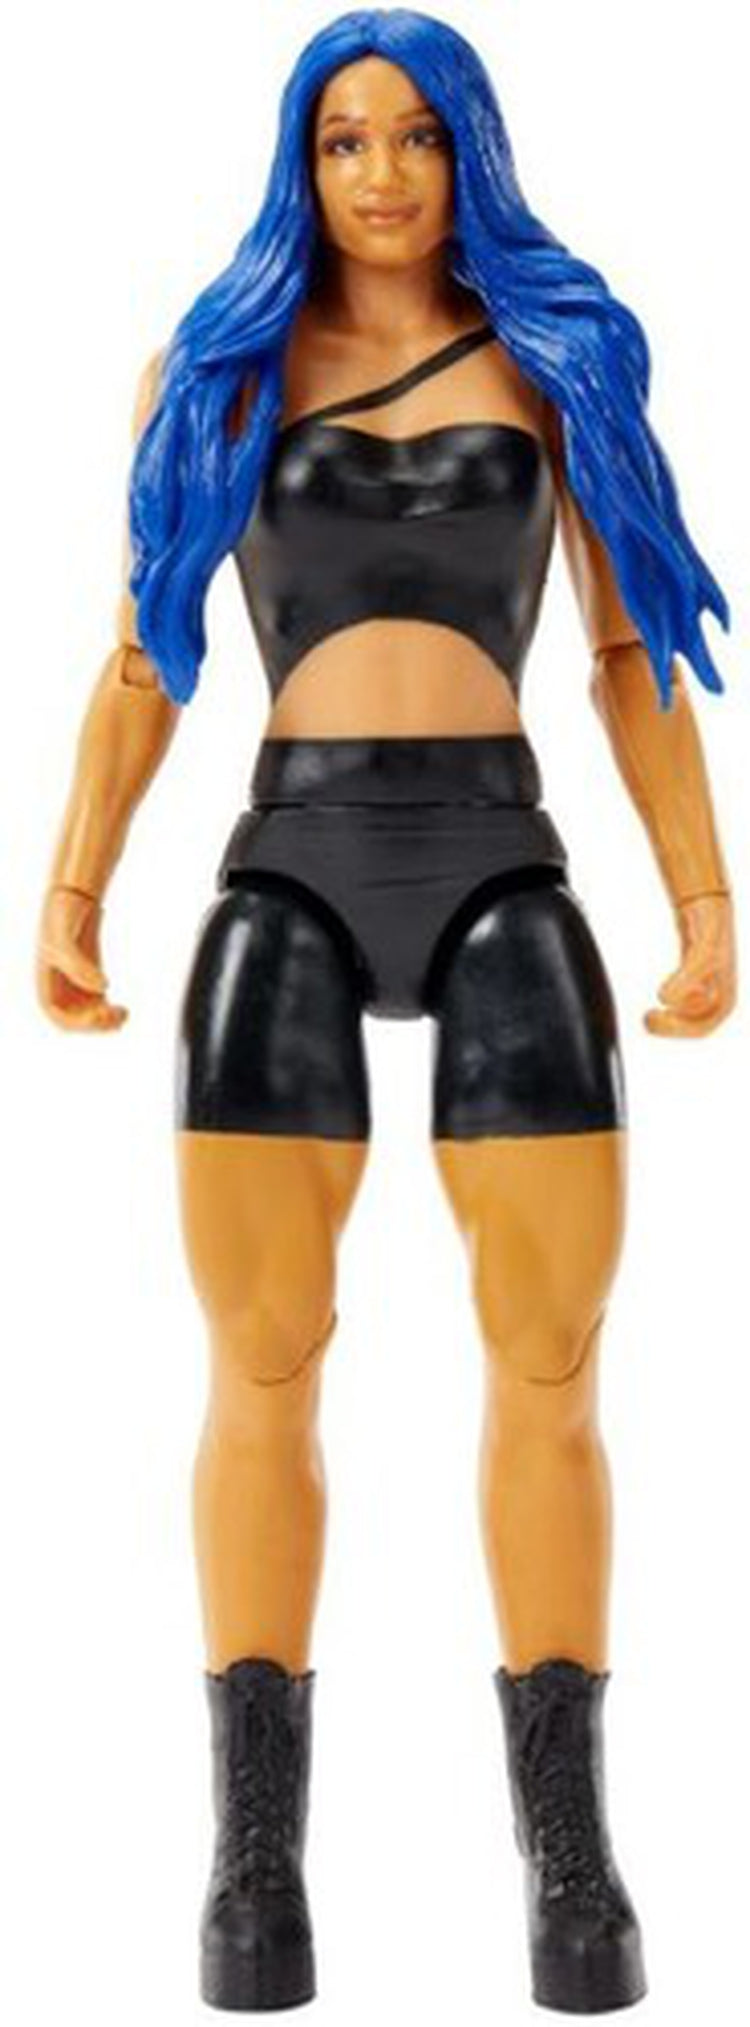 Mattel Collectible - WWE Sasha Banks